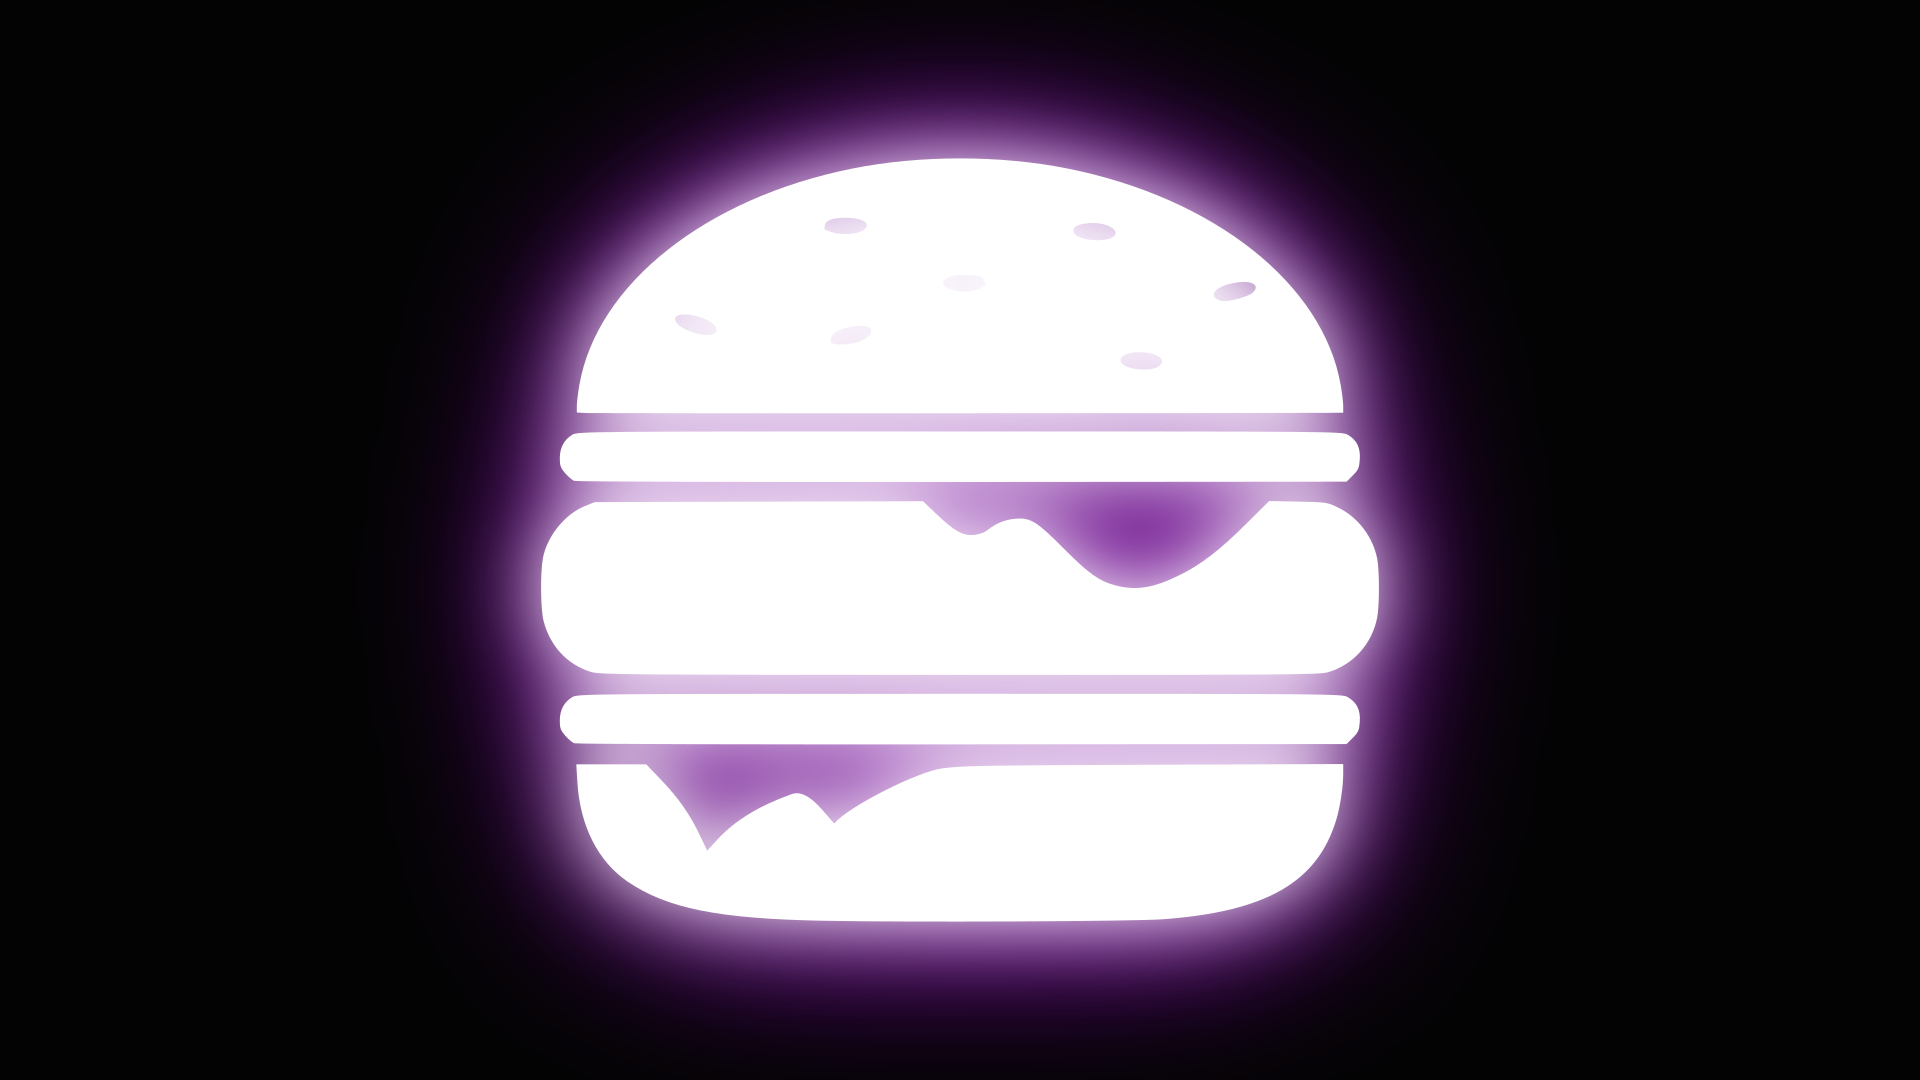 Icon for Spirit Animal Advice or Tasty Burger?